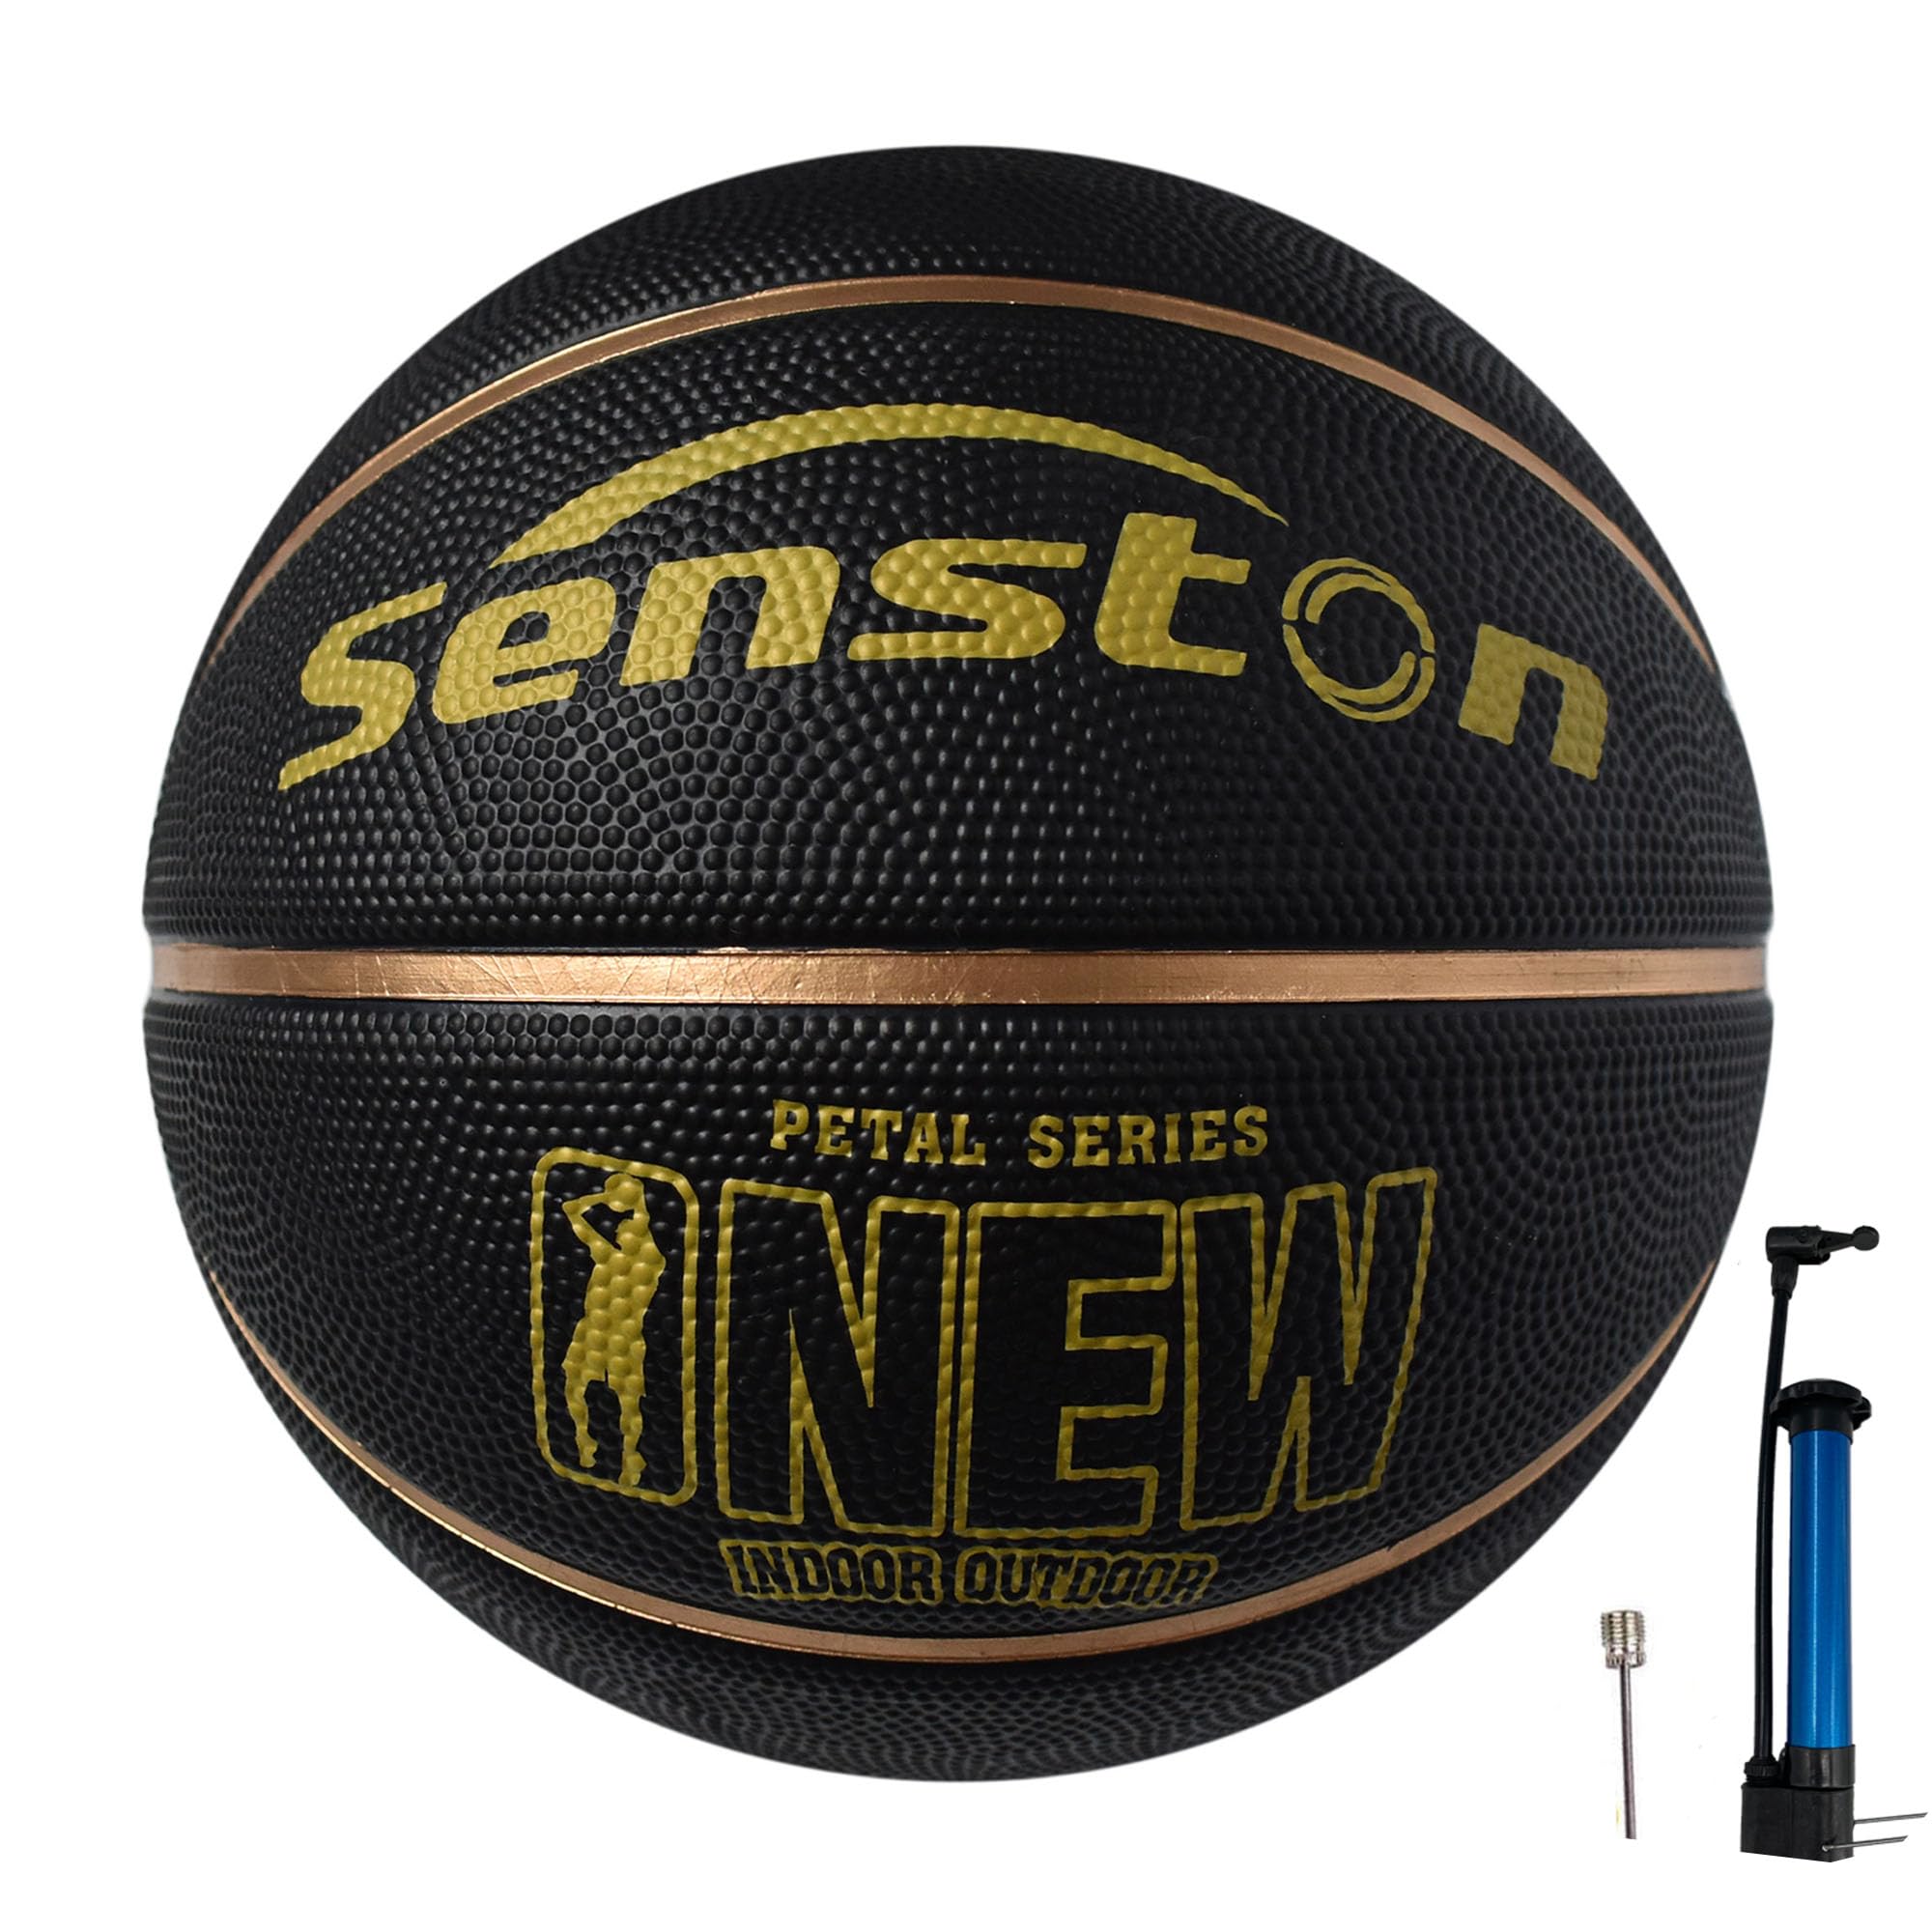 acheter Senston Ballon de Basket Taille 5 avec Pompe, B